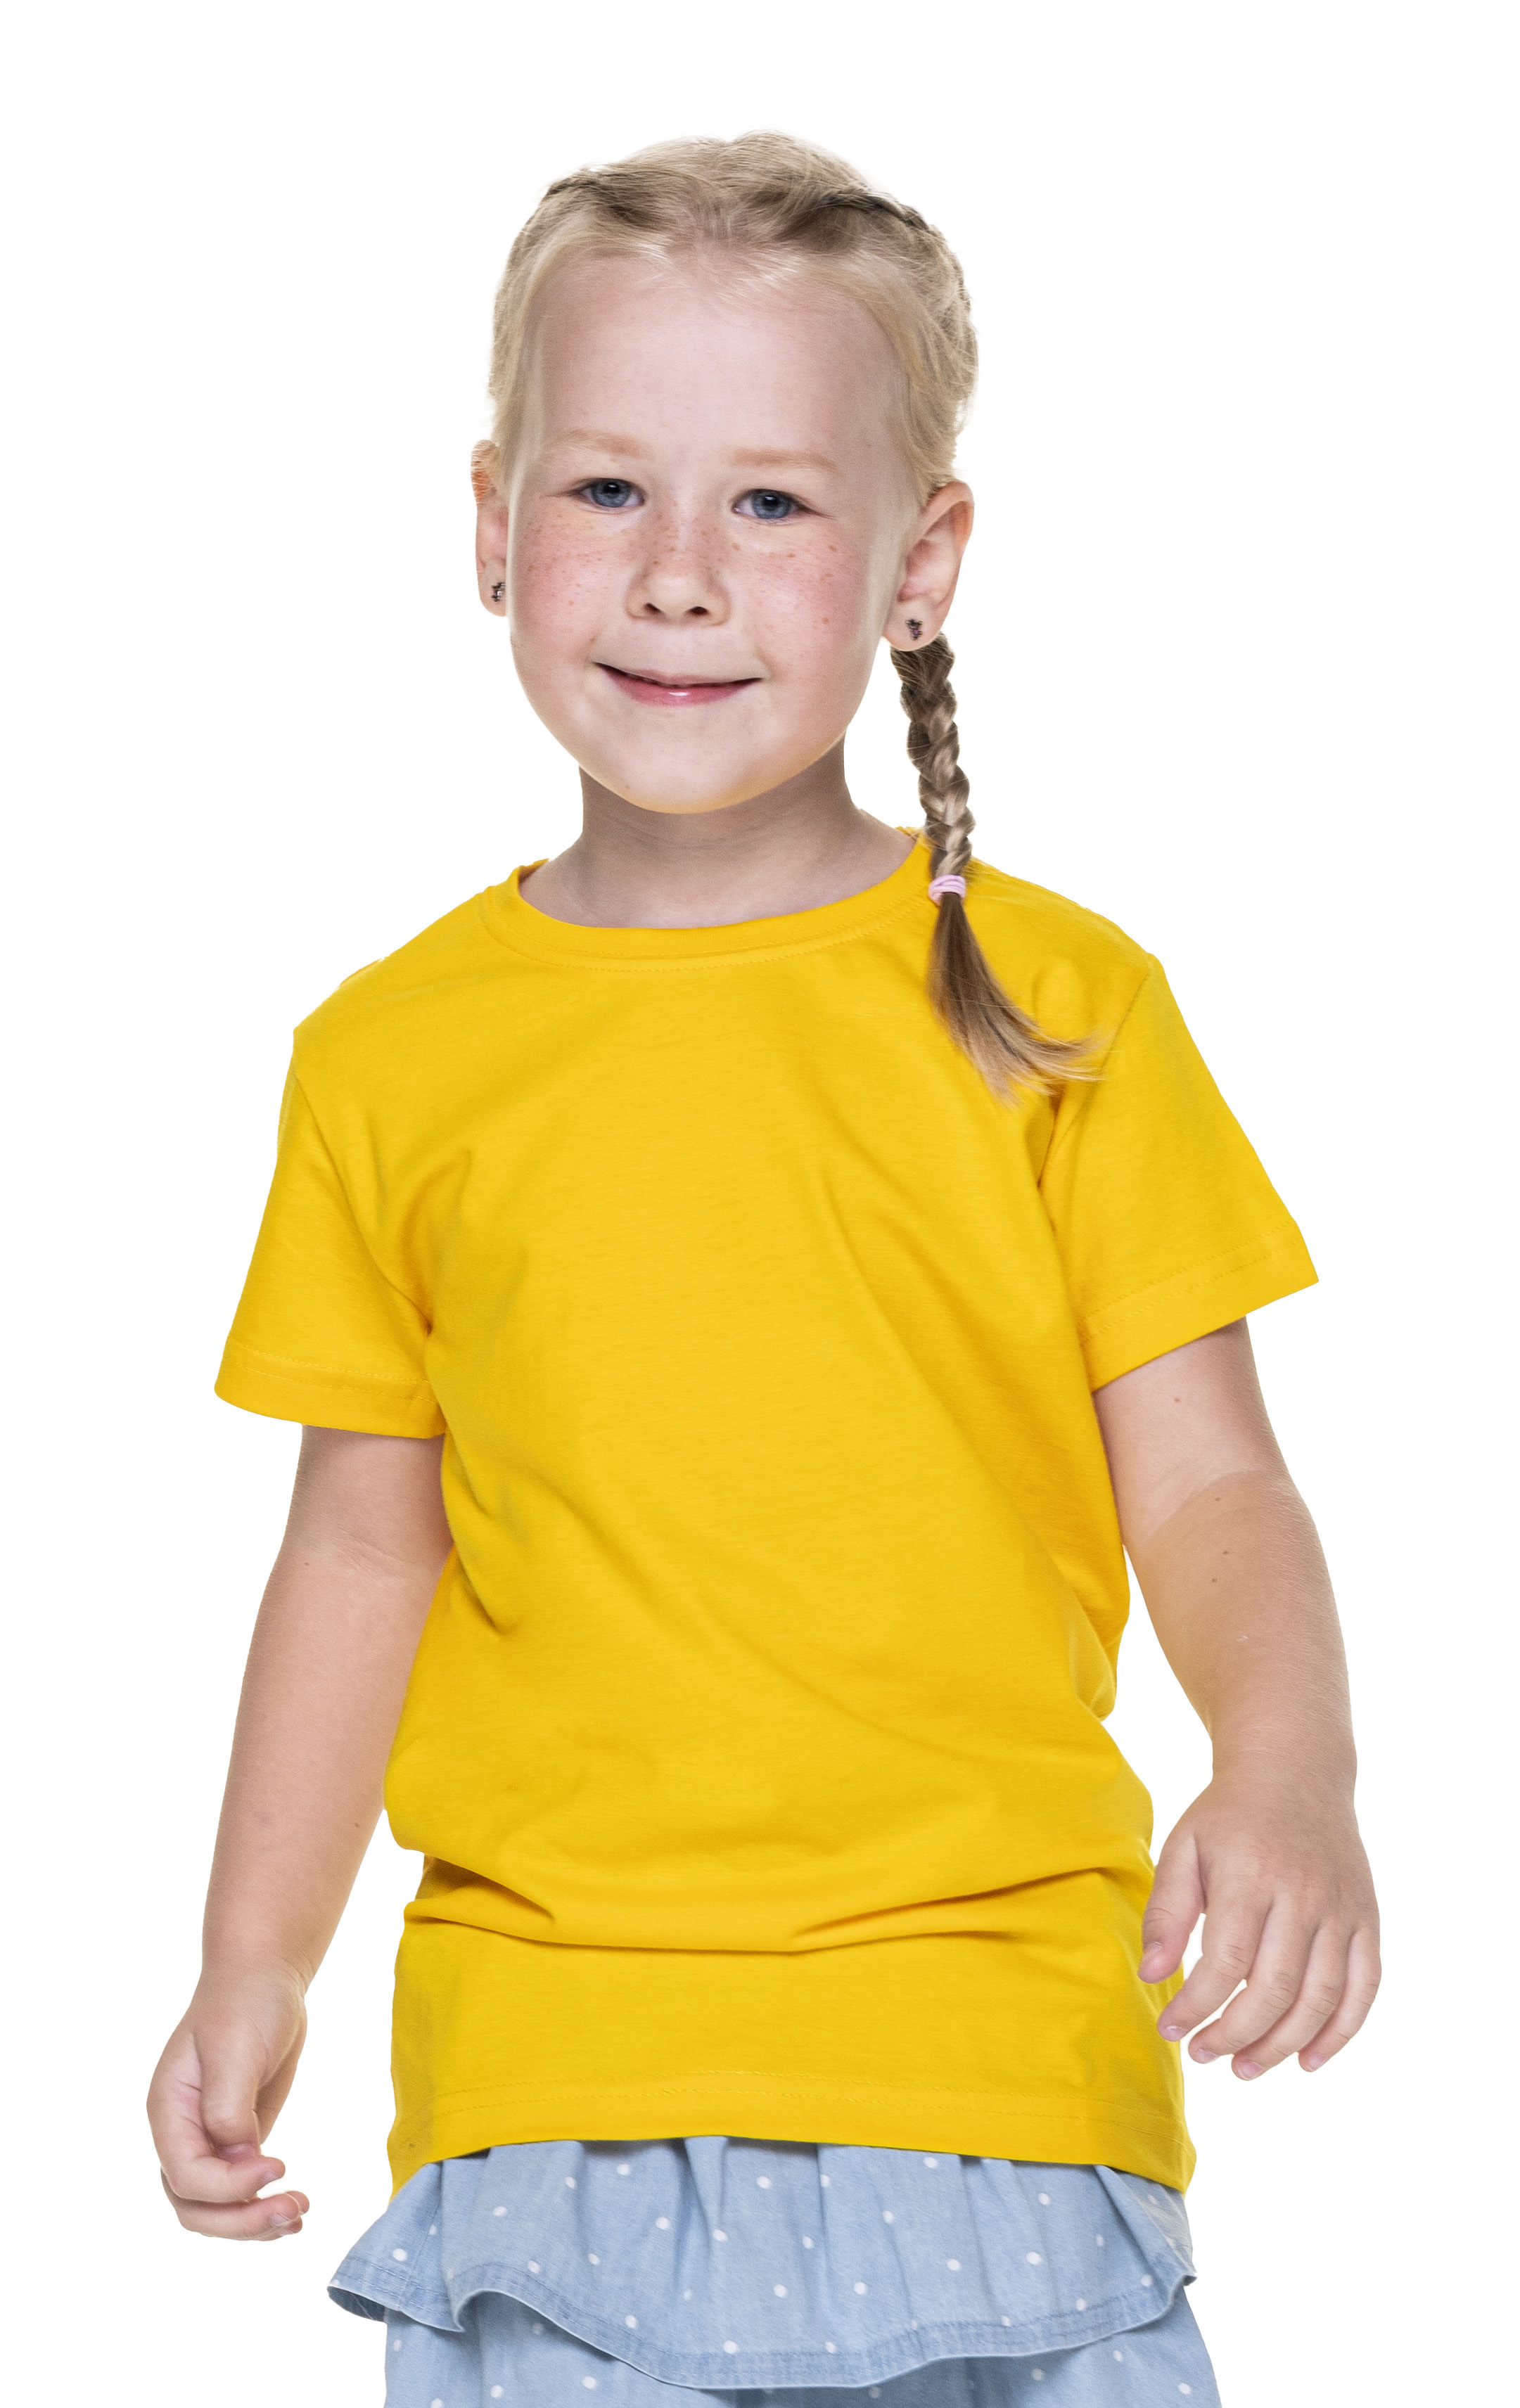 Koszulka Promostars Standard KID - żółta